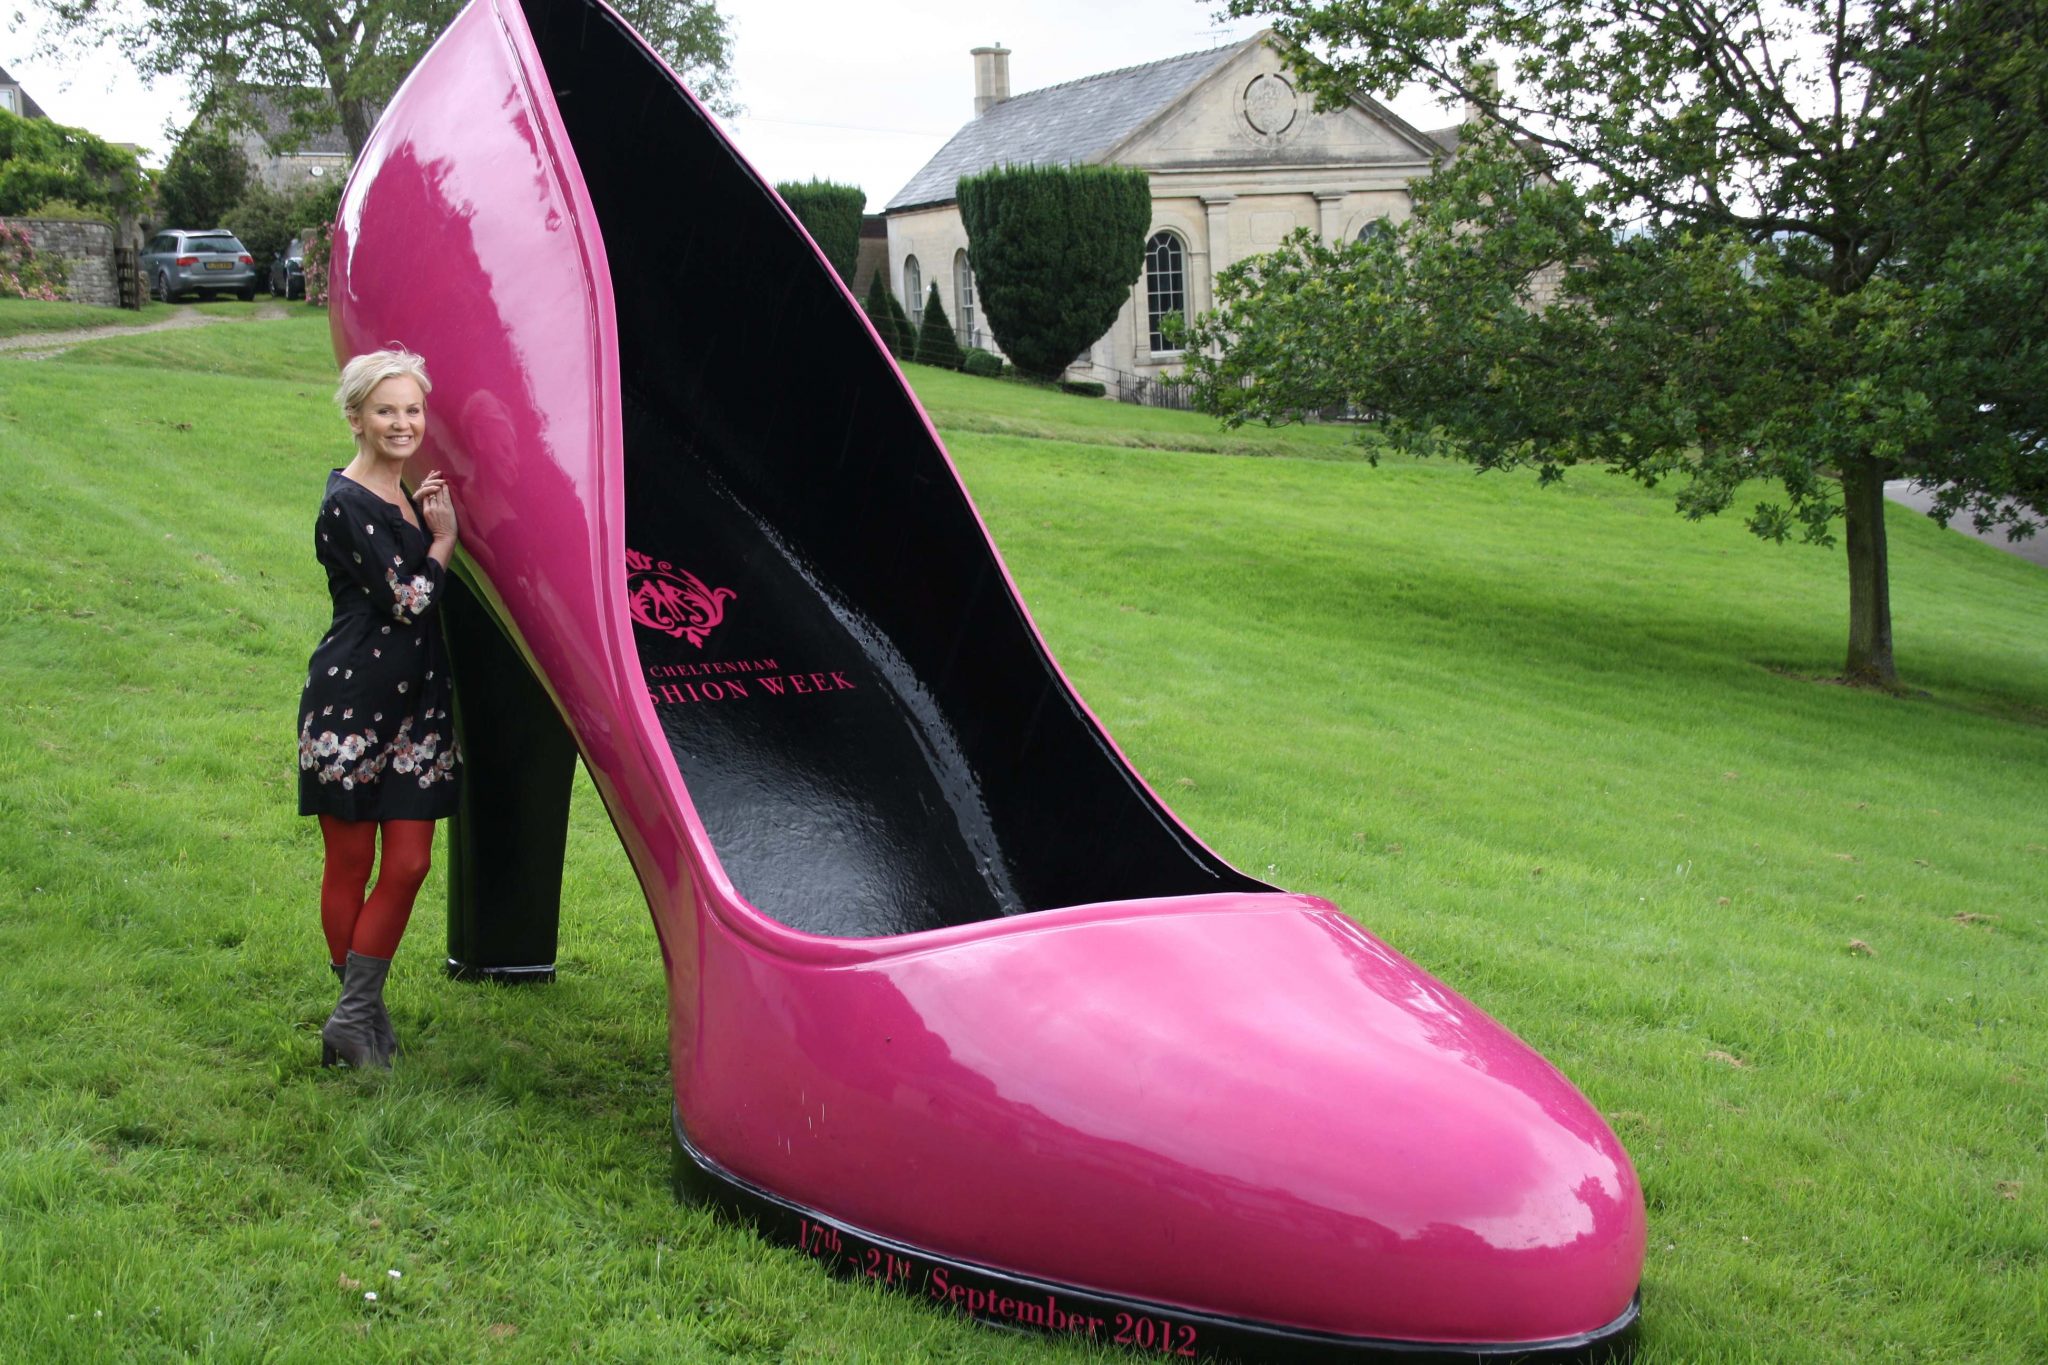 Giant shoe heralds fashion week...